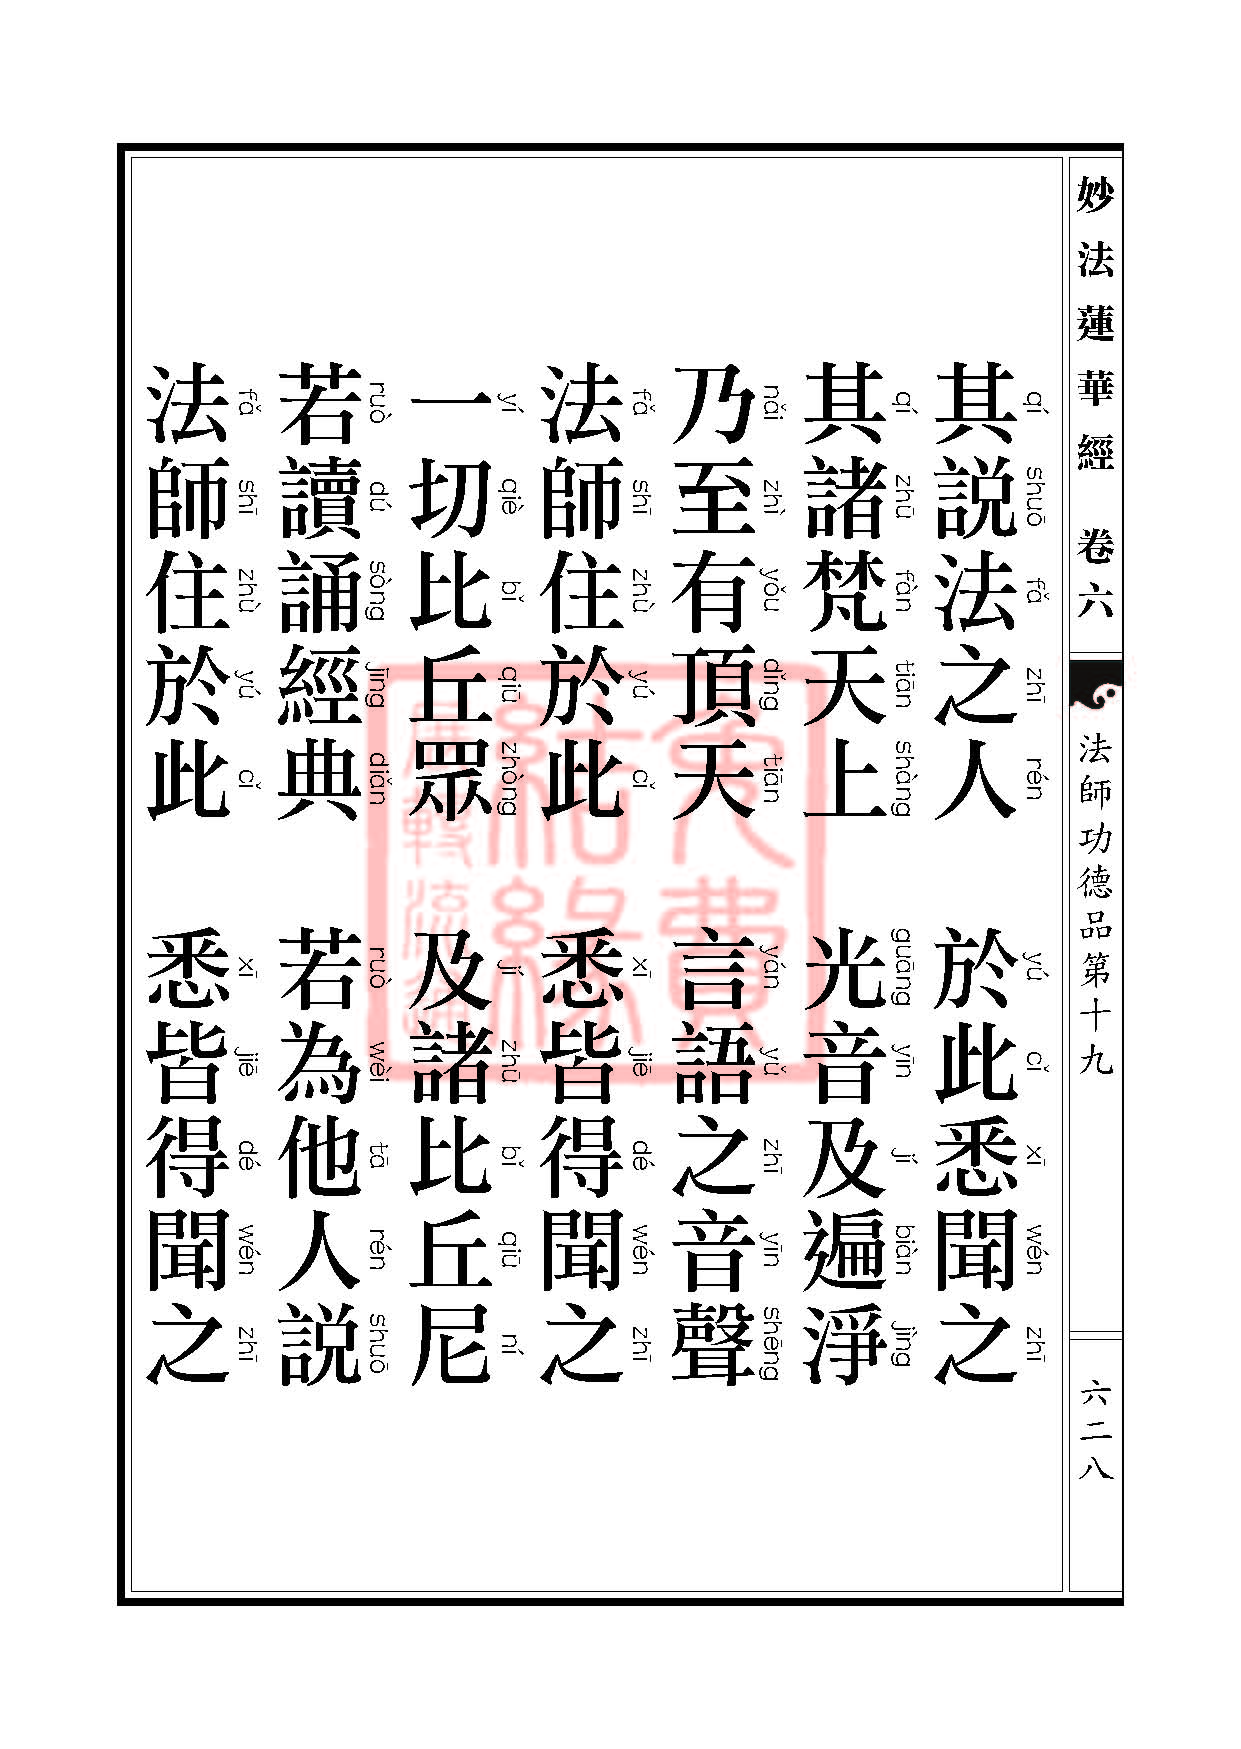 Book_FHJ_HK-A6-PY_Web_页面_628.jpg